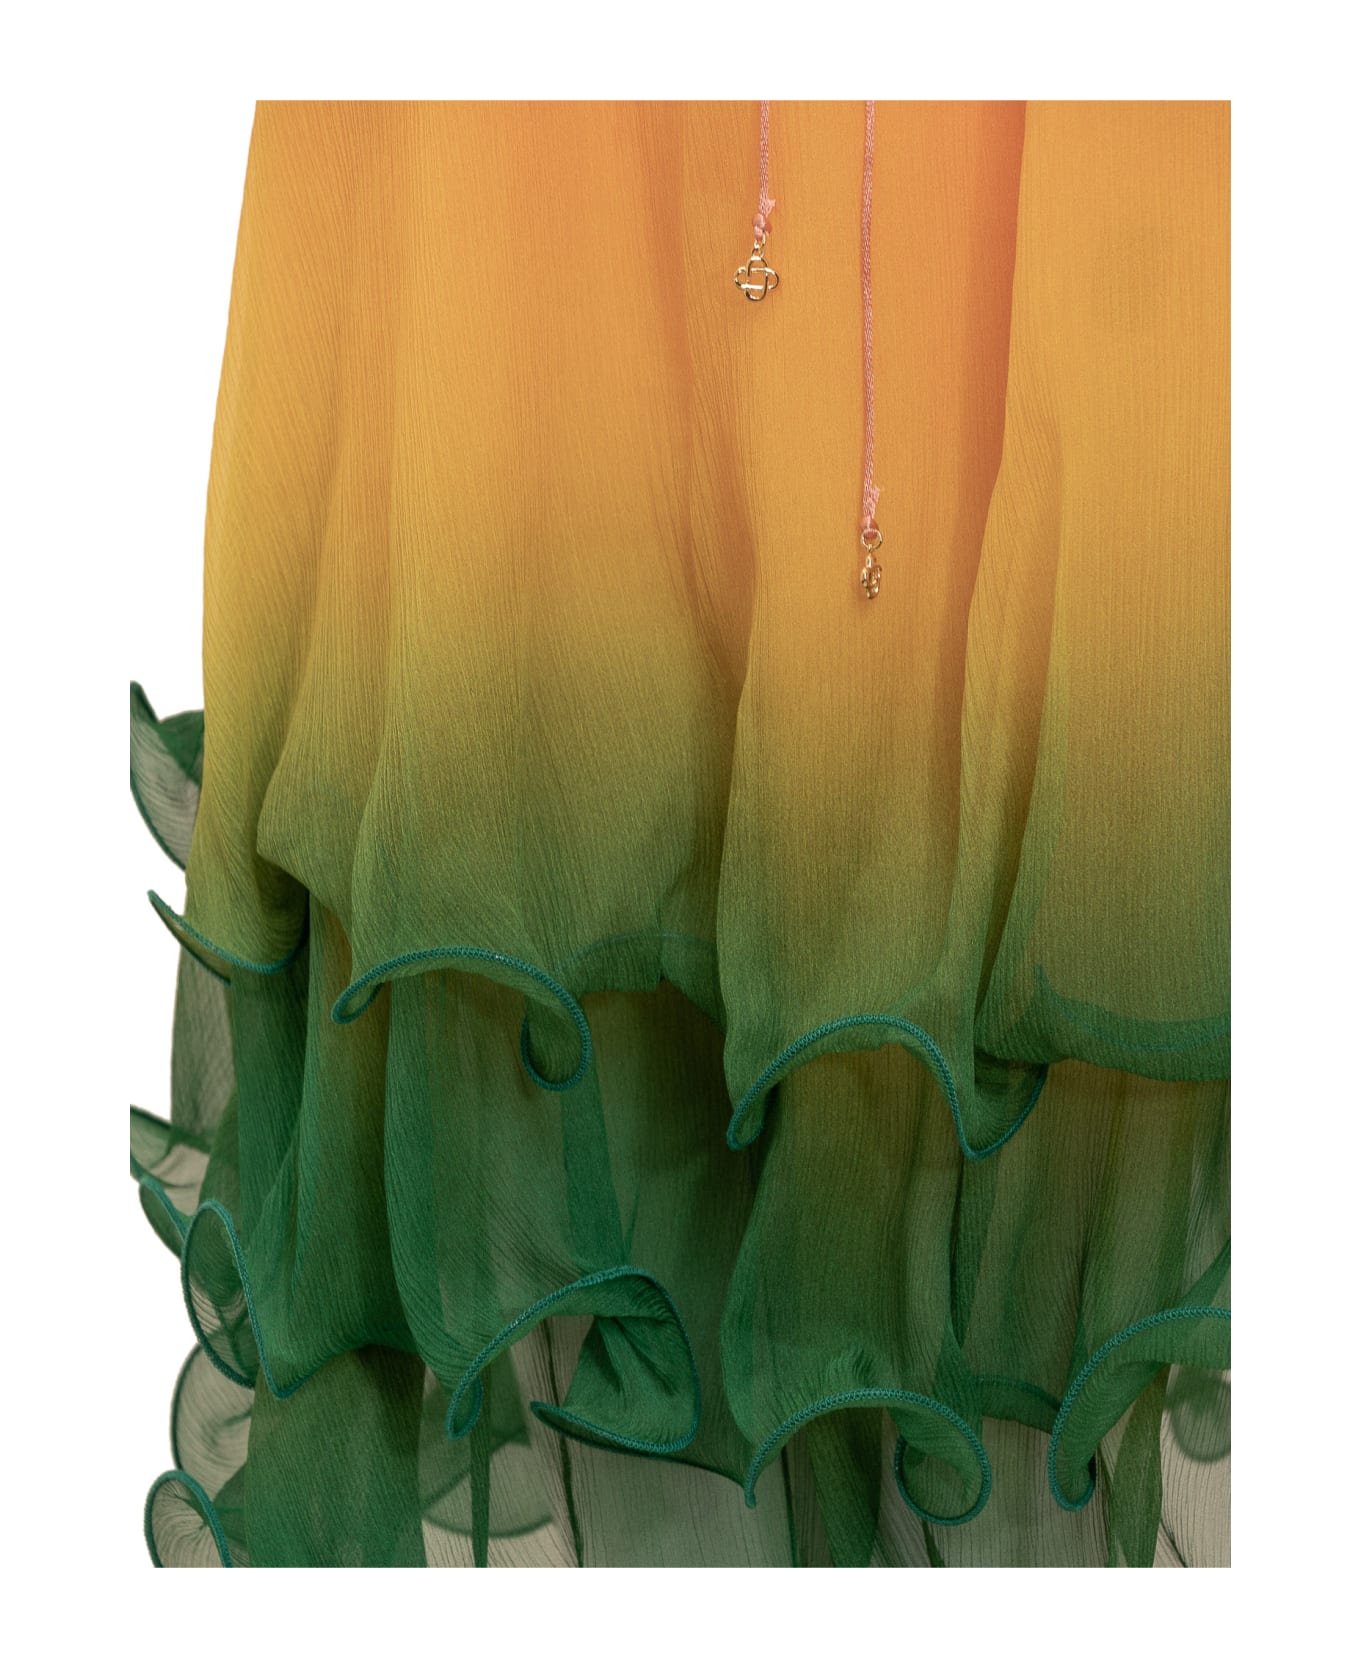 Casablanca Silk Cocktail Dress - RAINBOW GRADIENT